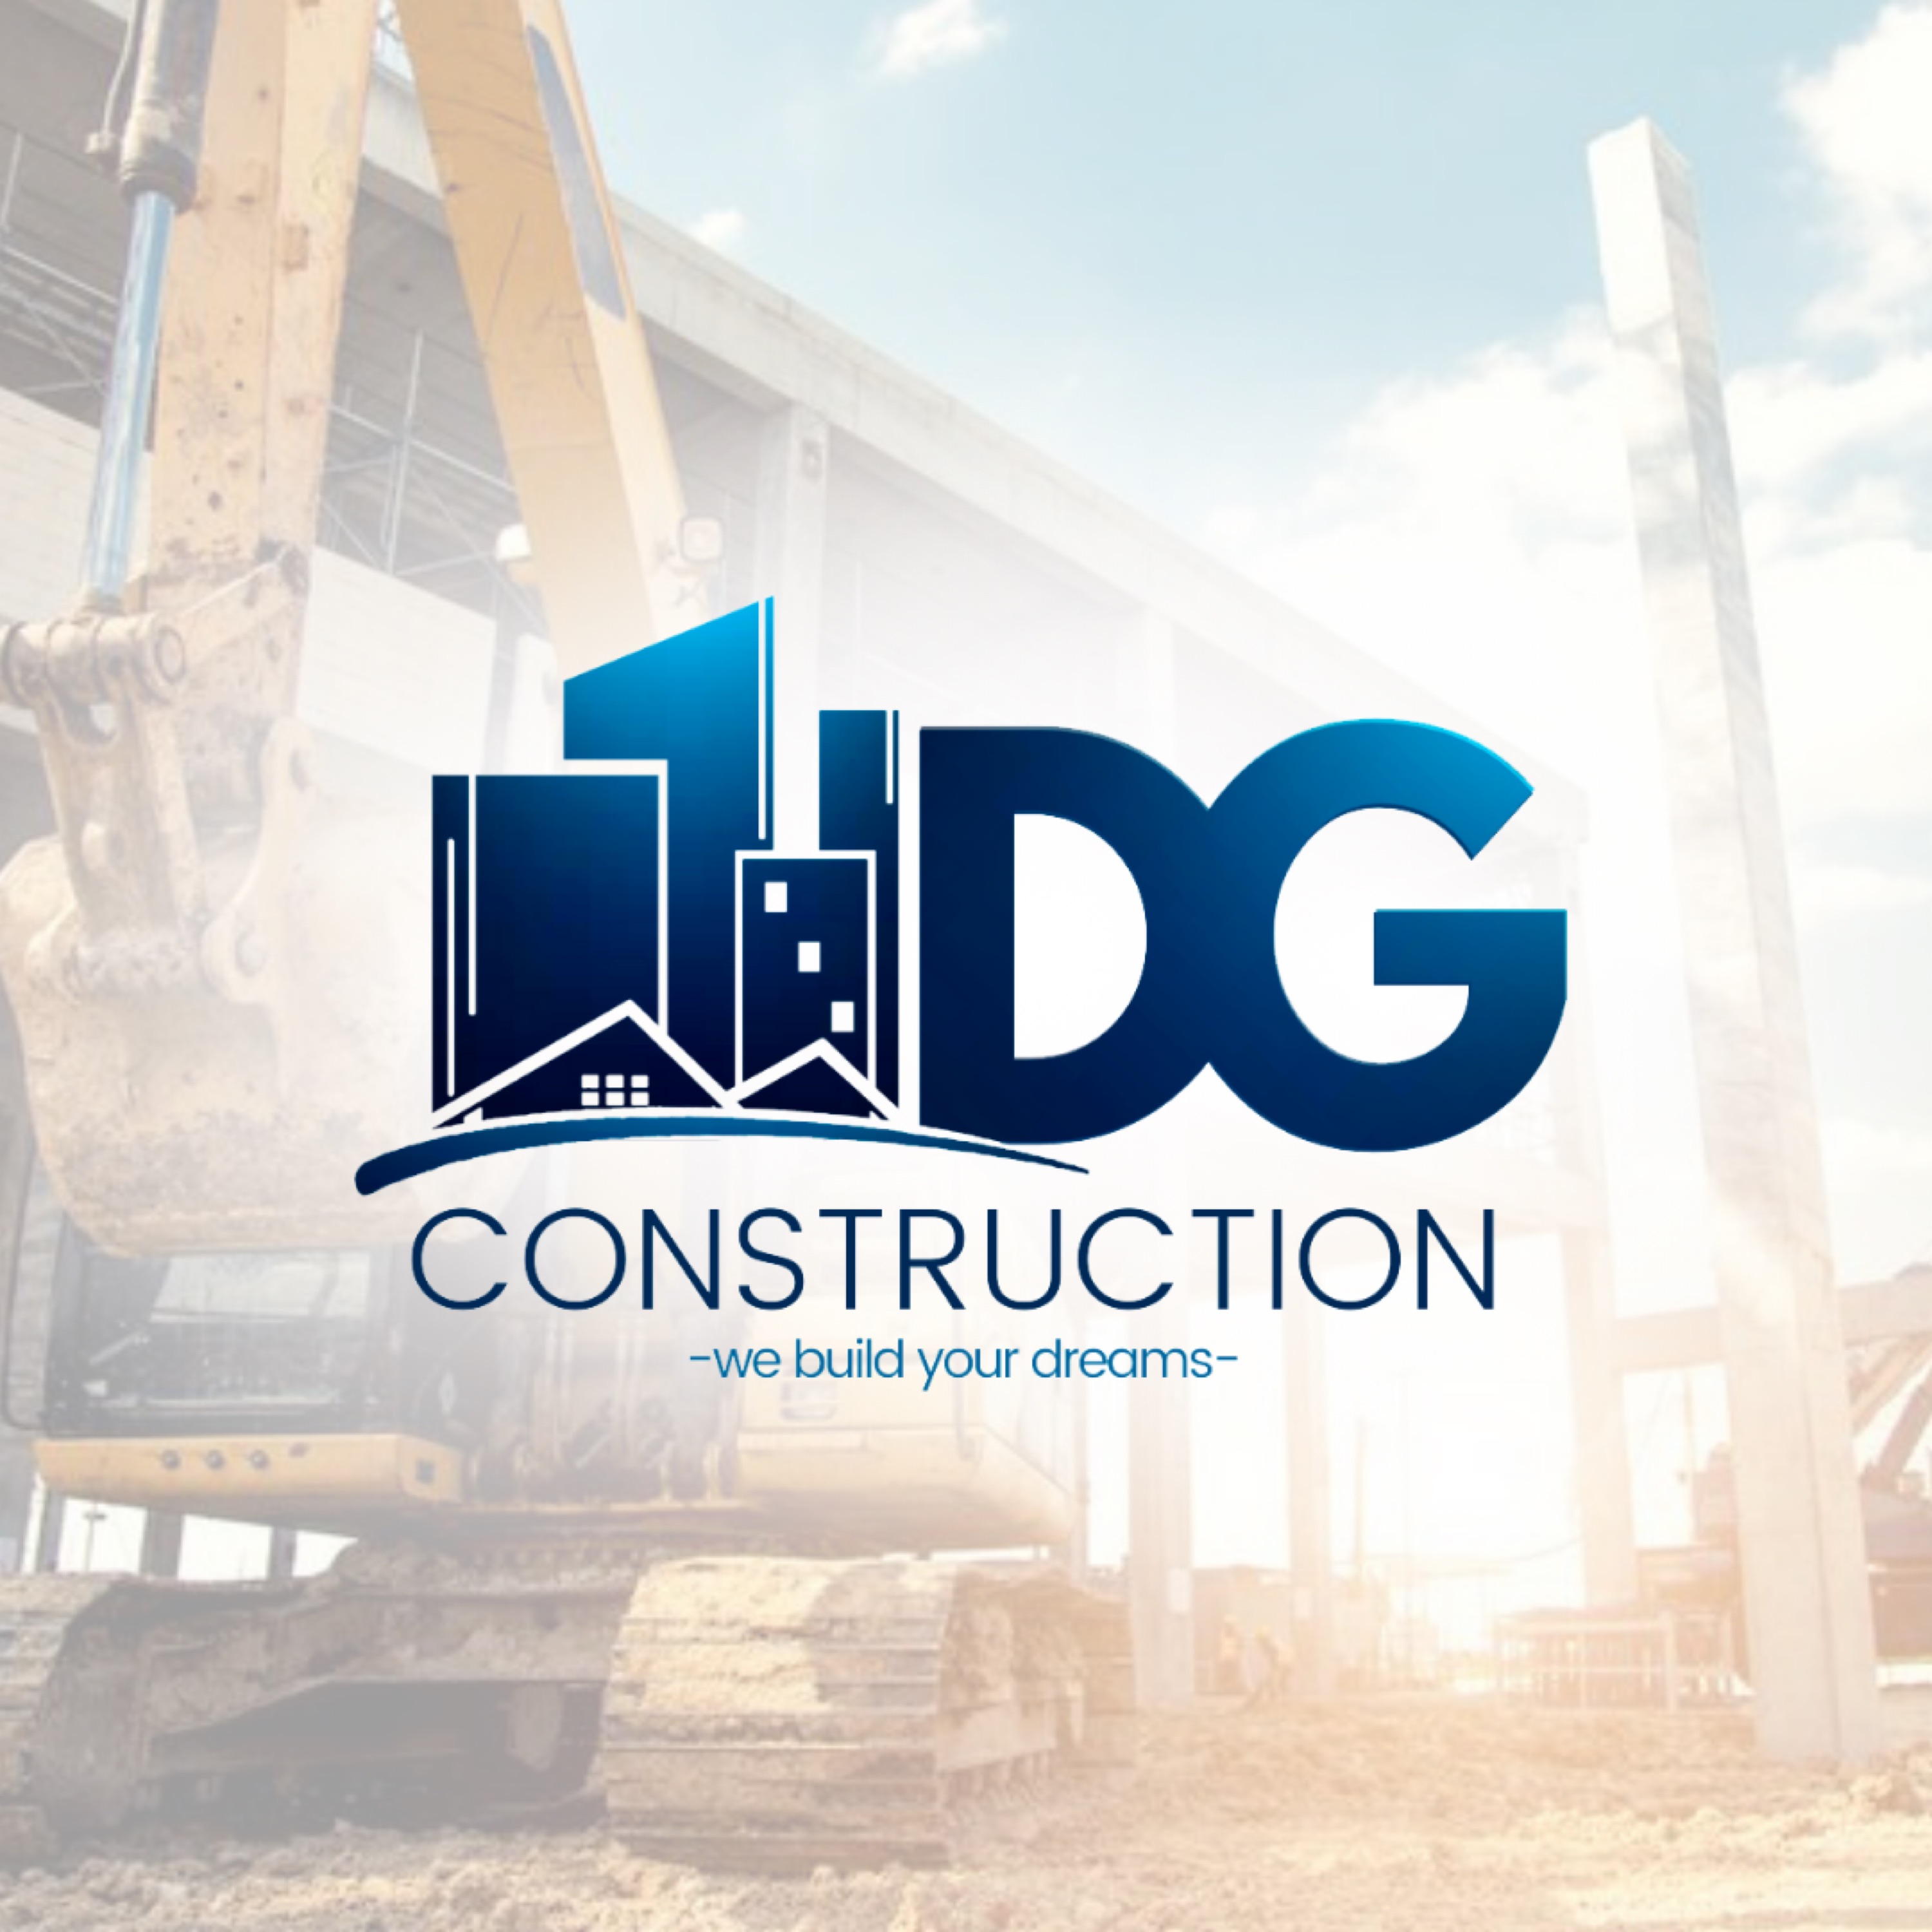 DG Construction Logo